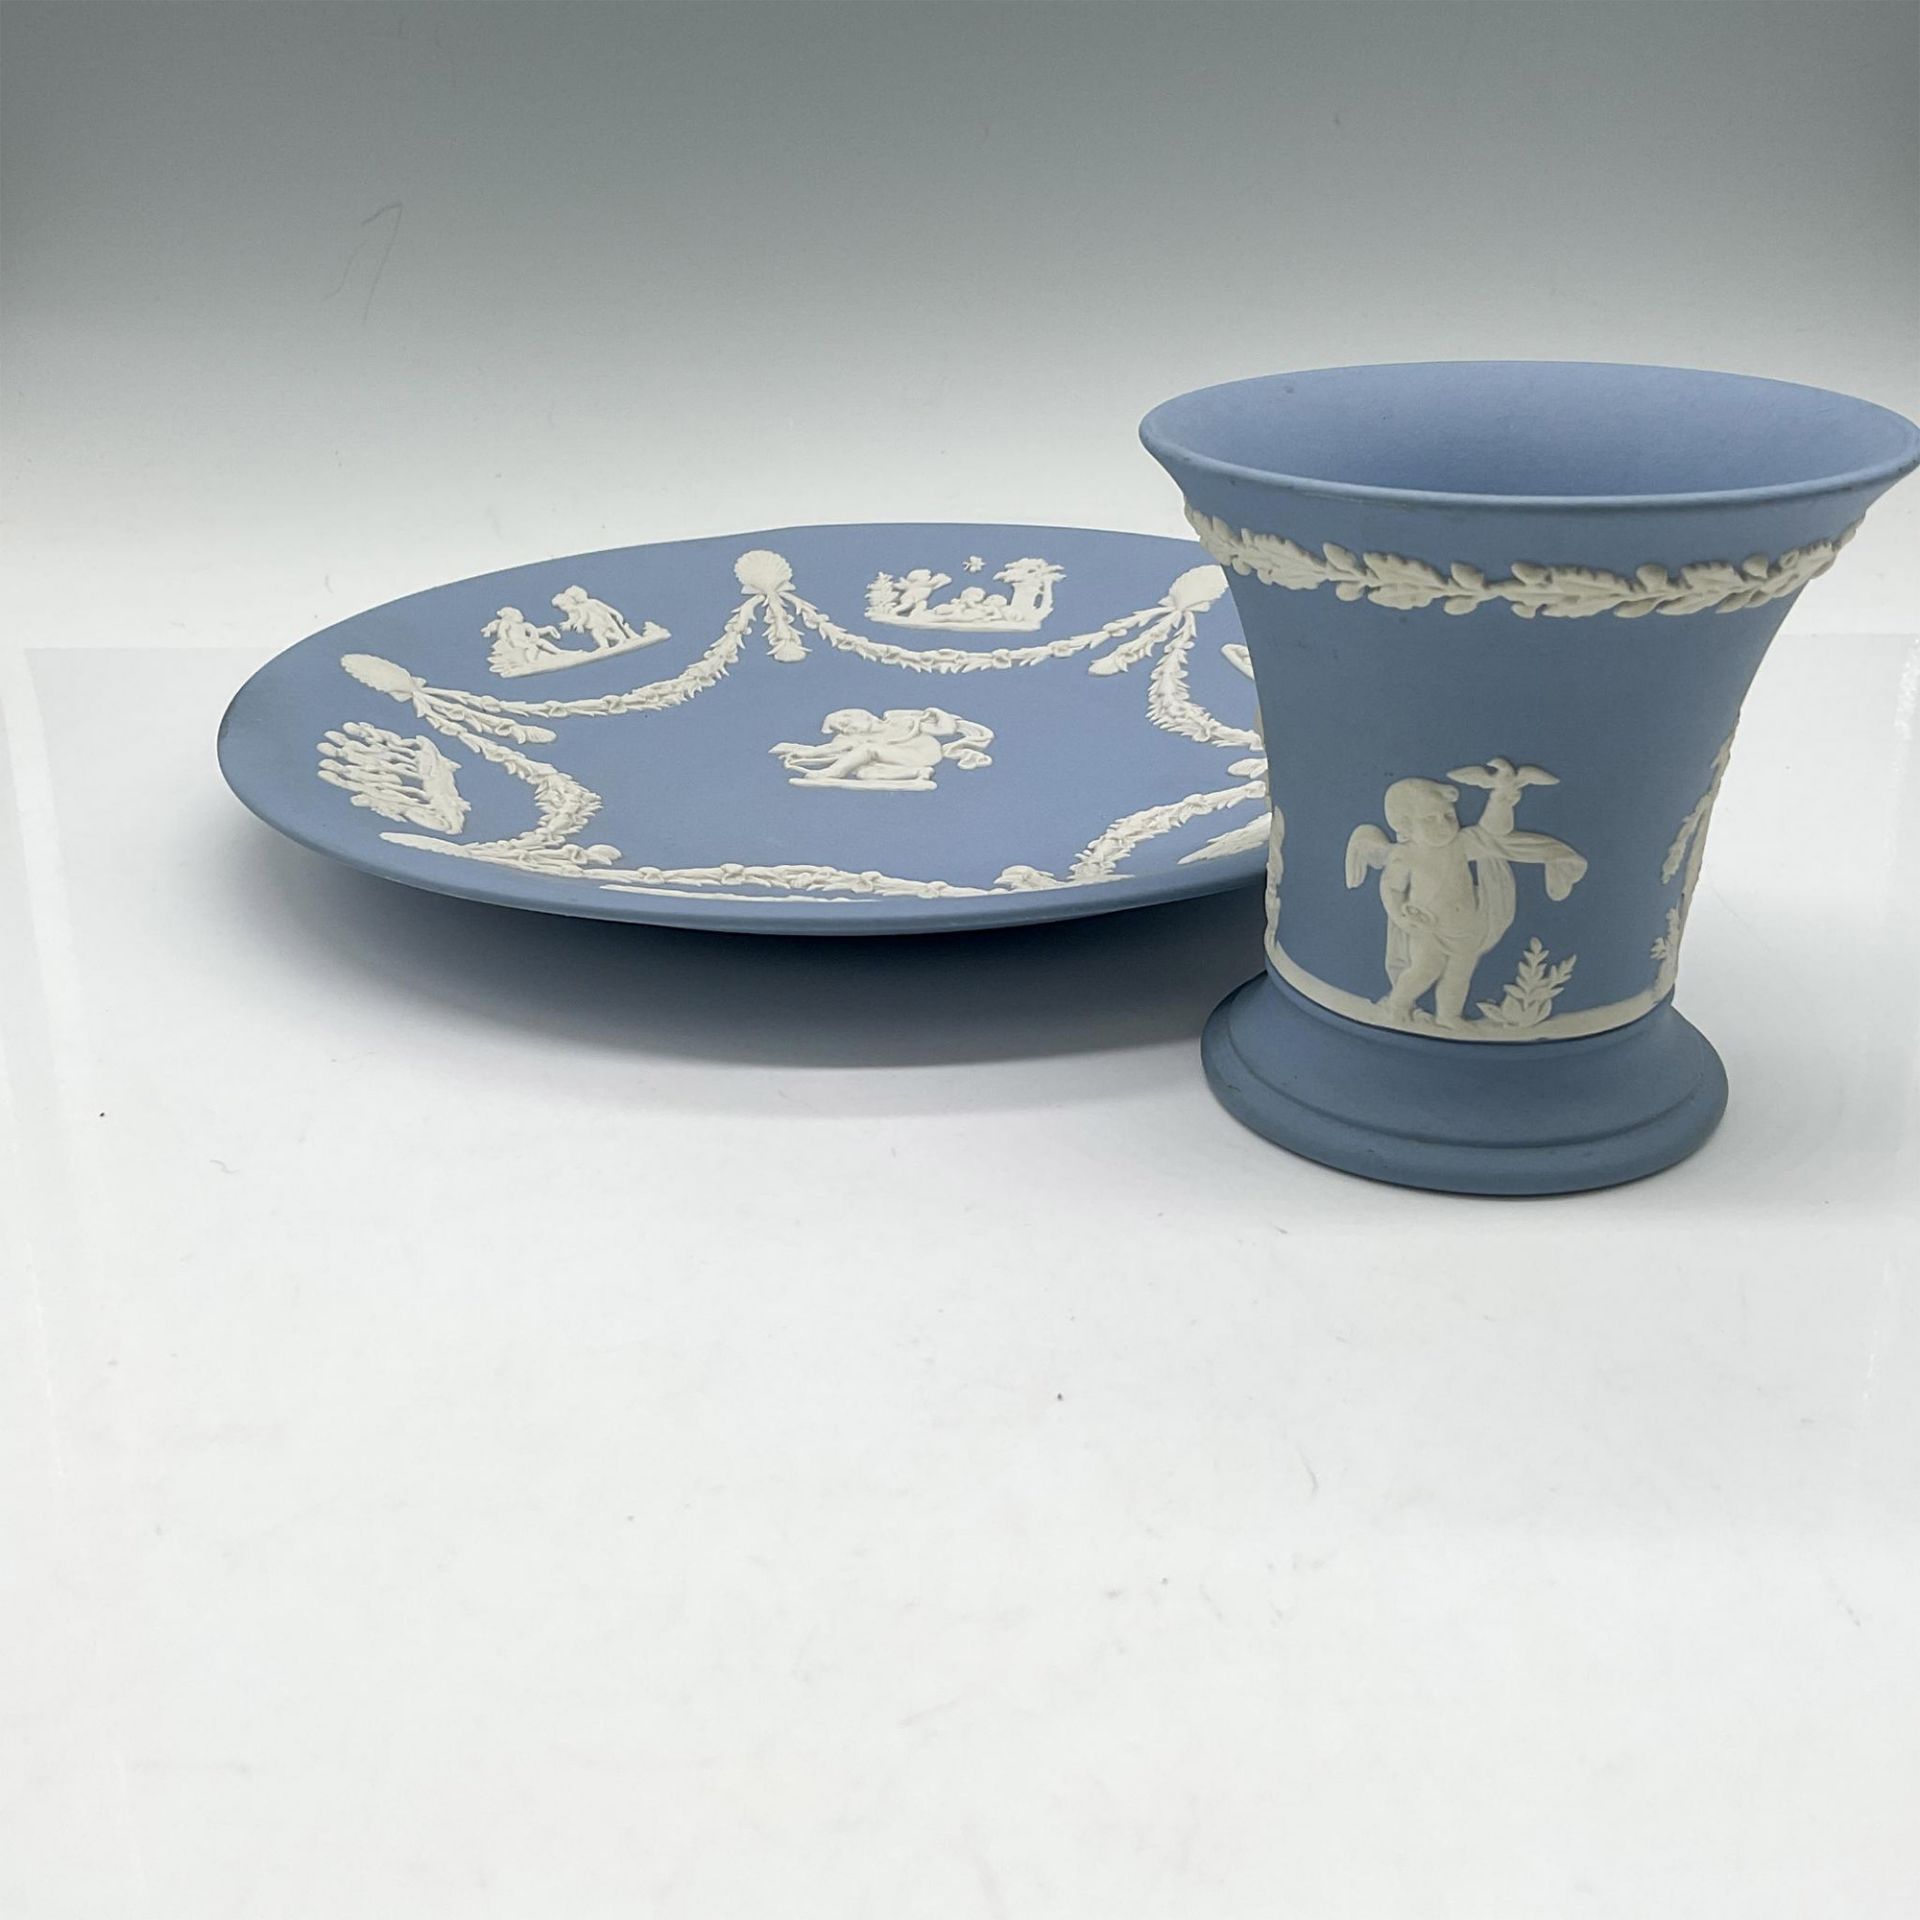 2pc Wedgwood Jasperware Decorative Plate + Cup - Image 2 of 3